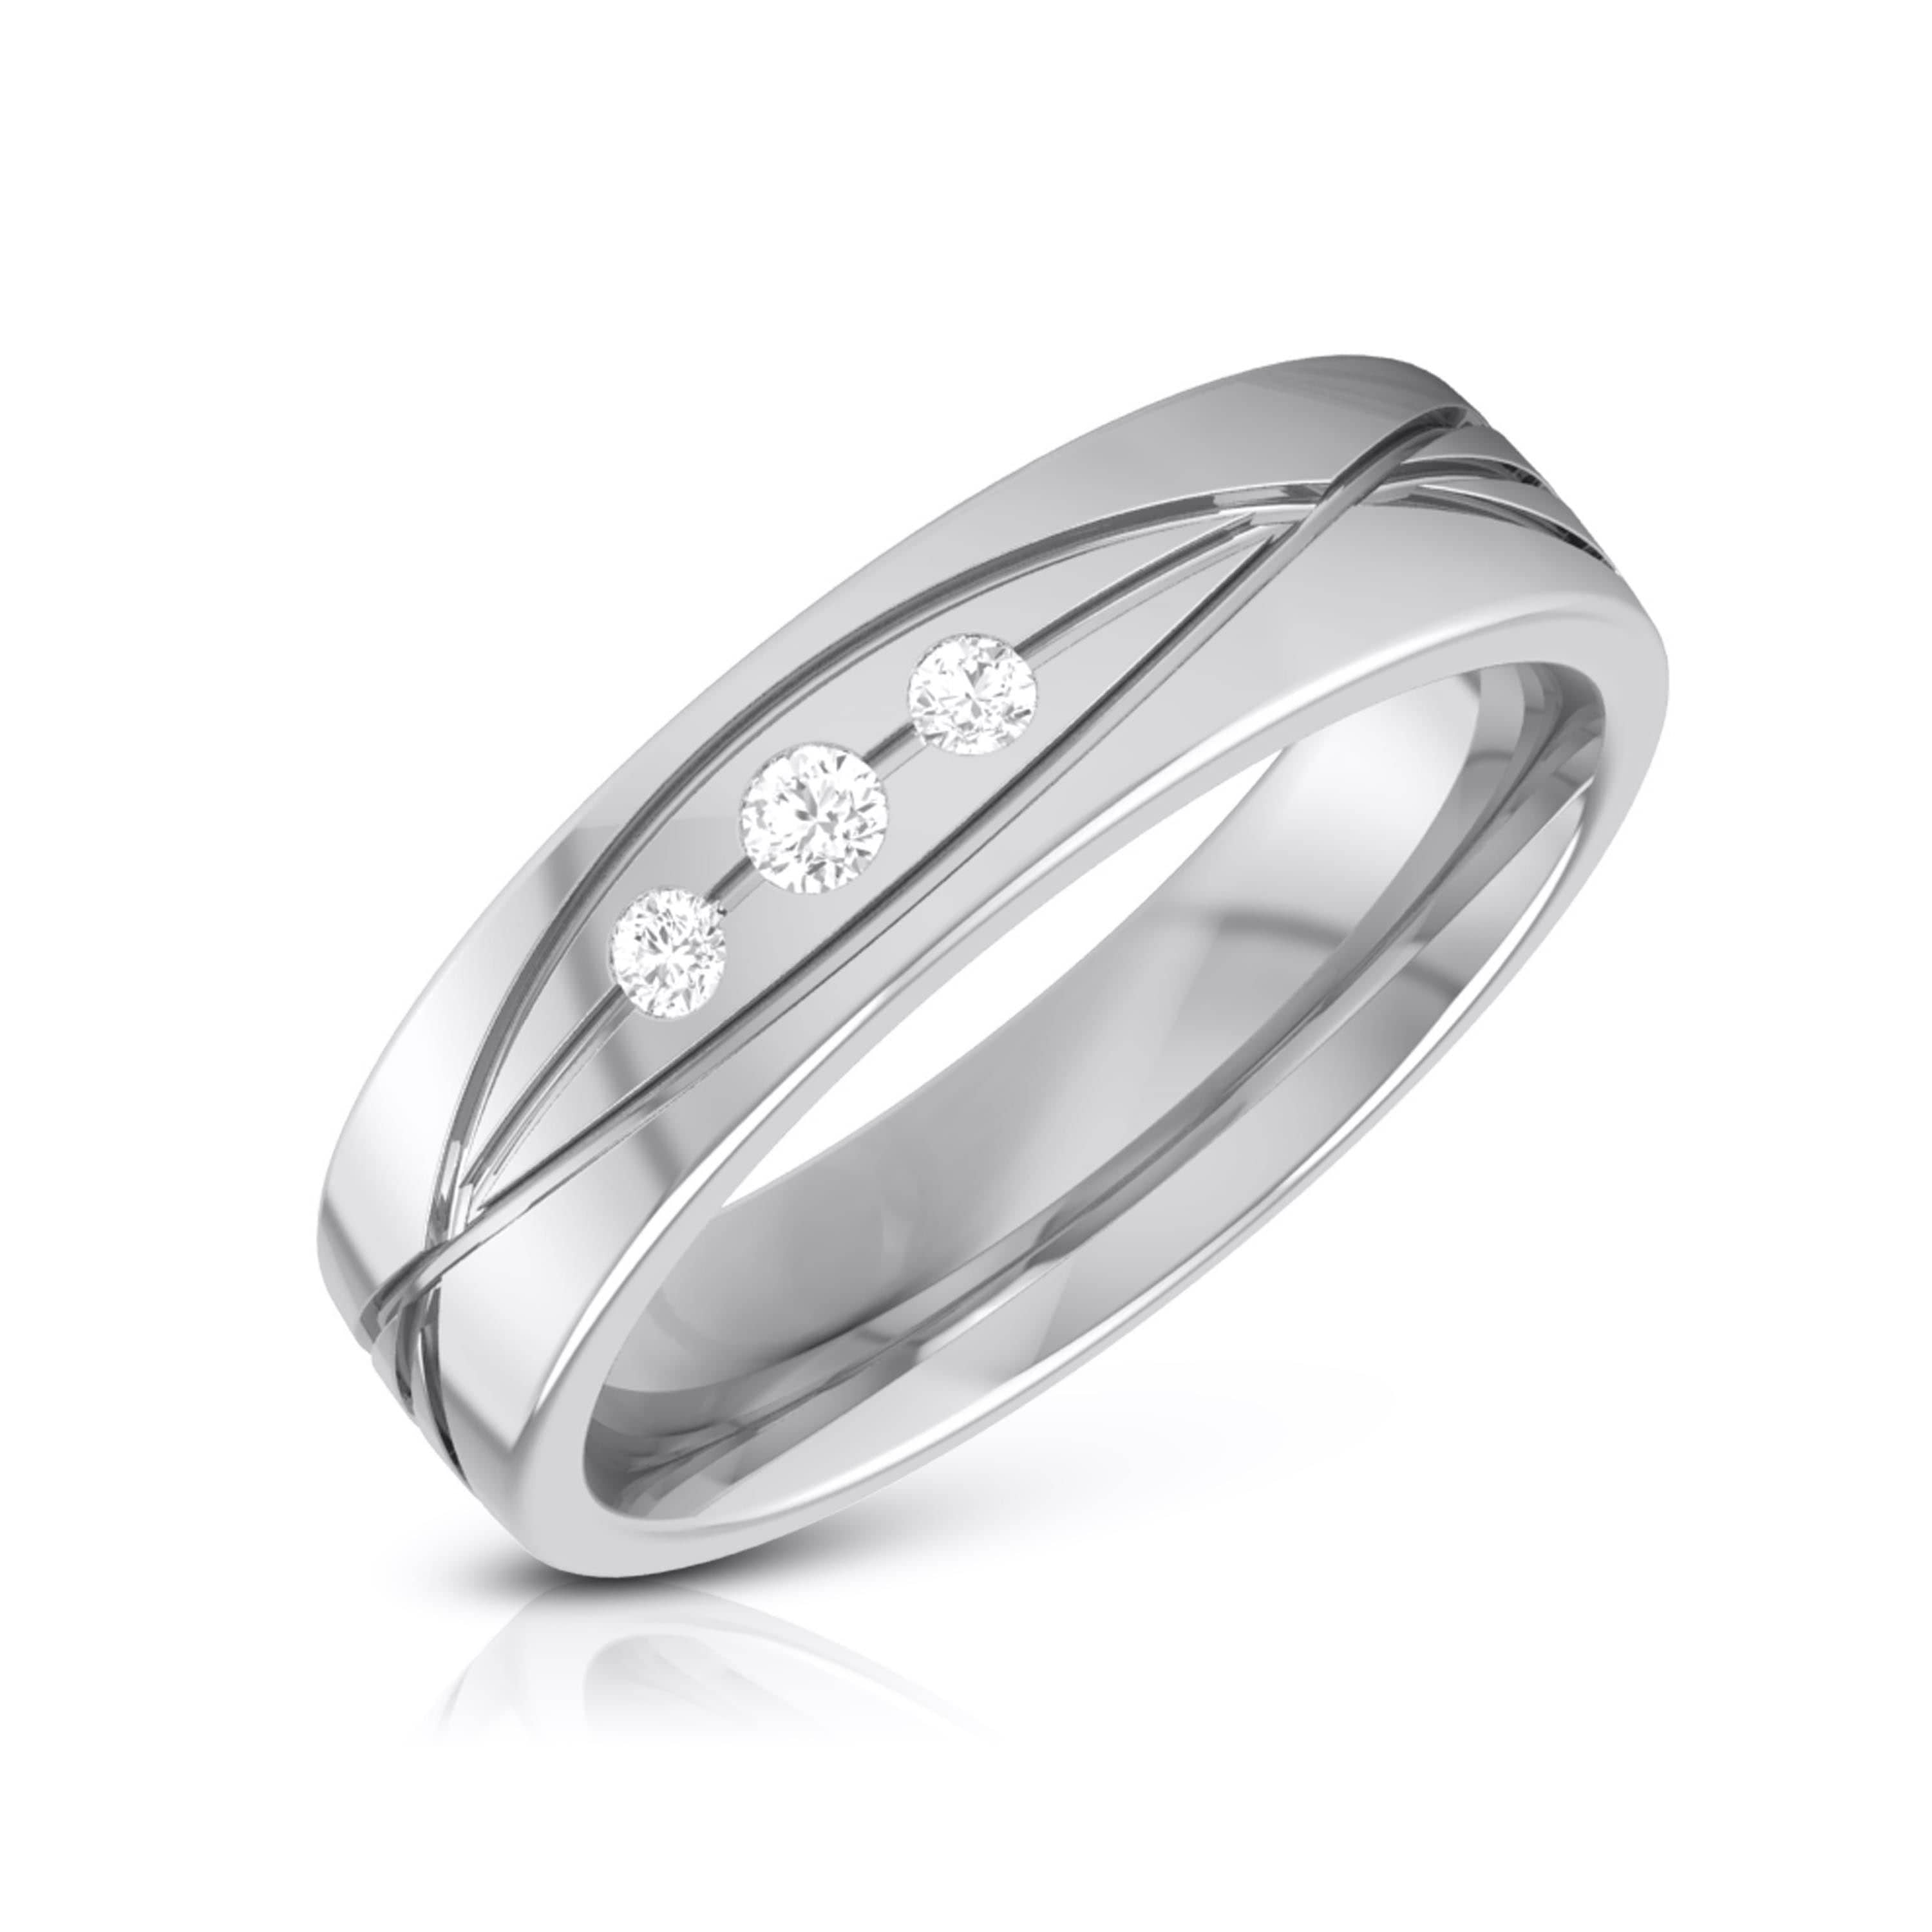 Buy Three Layer Diamond Ring Designs Online